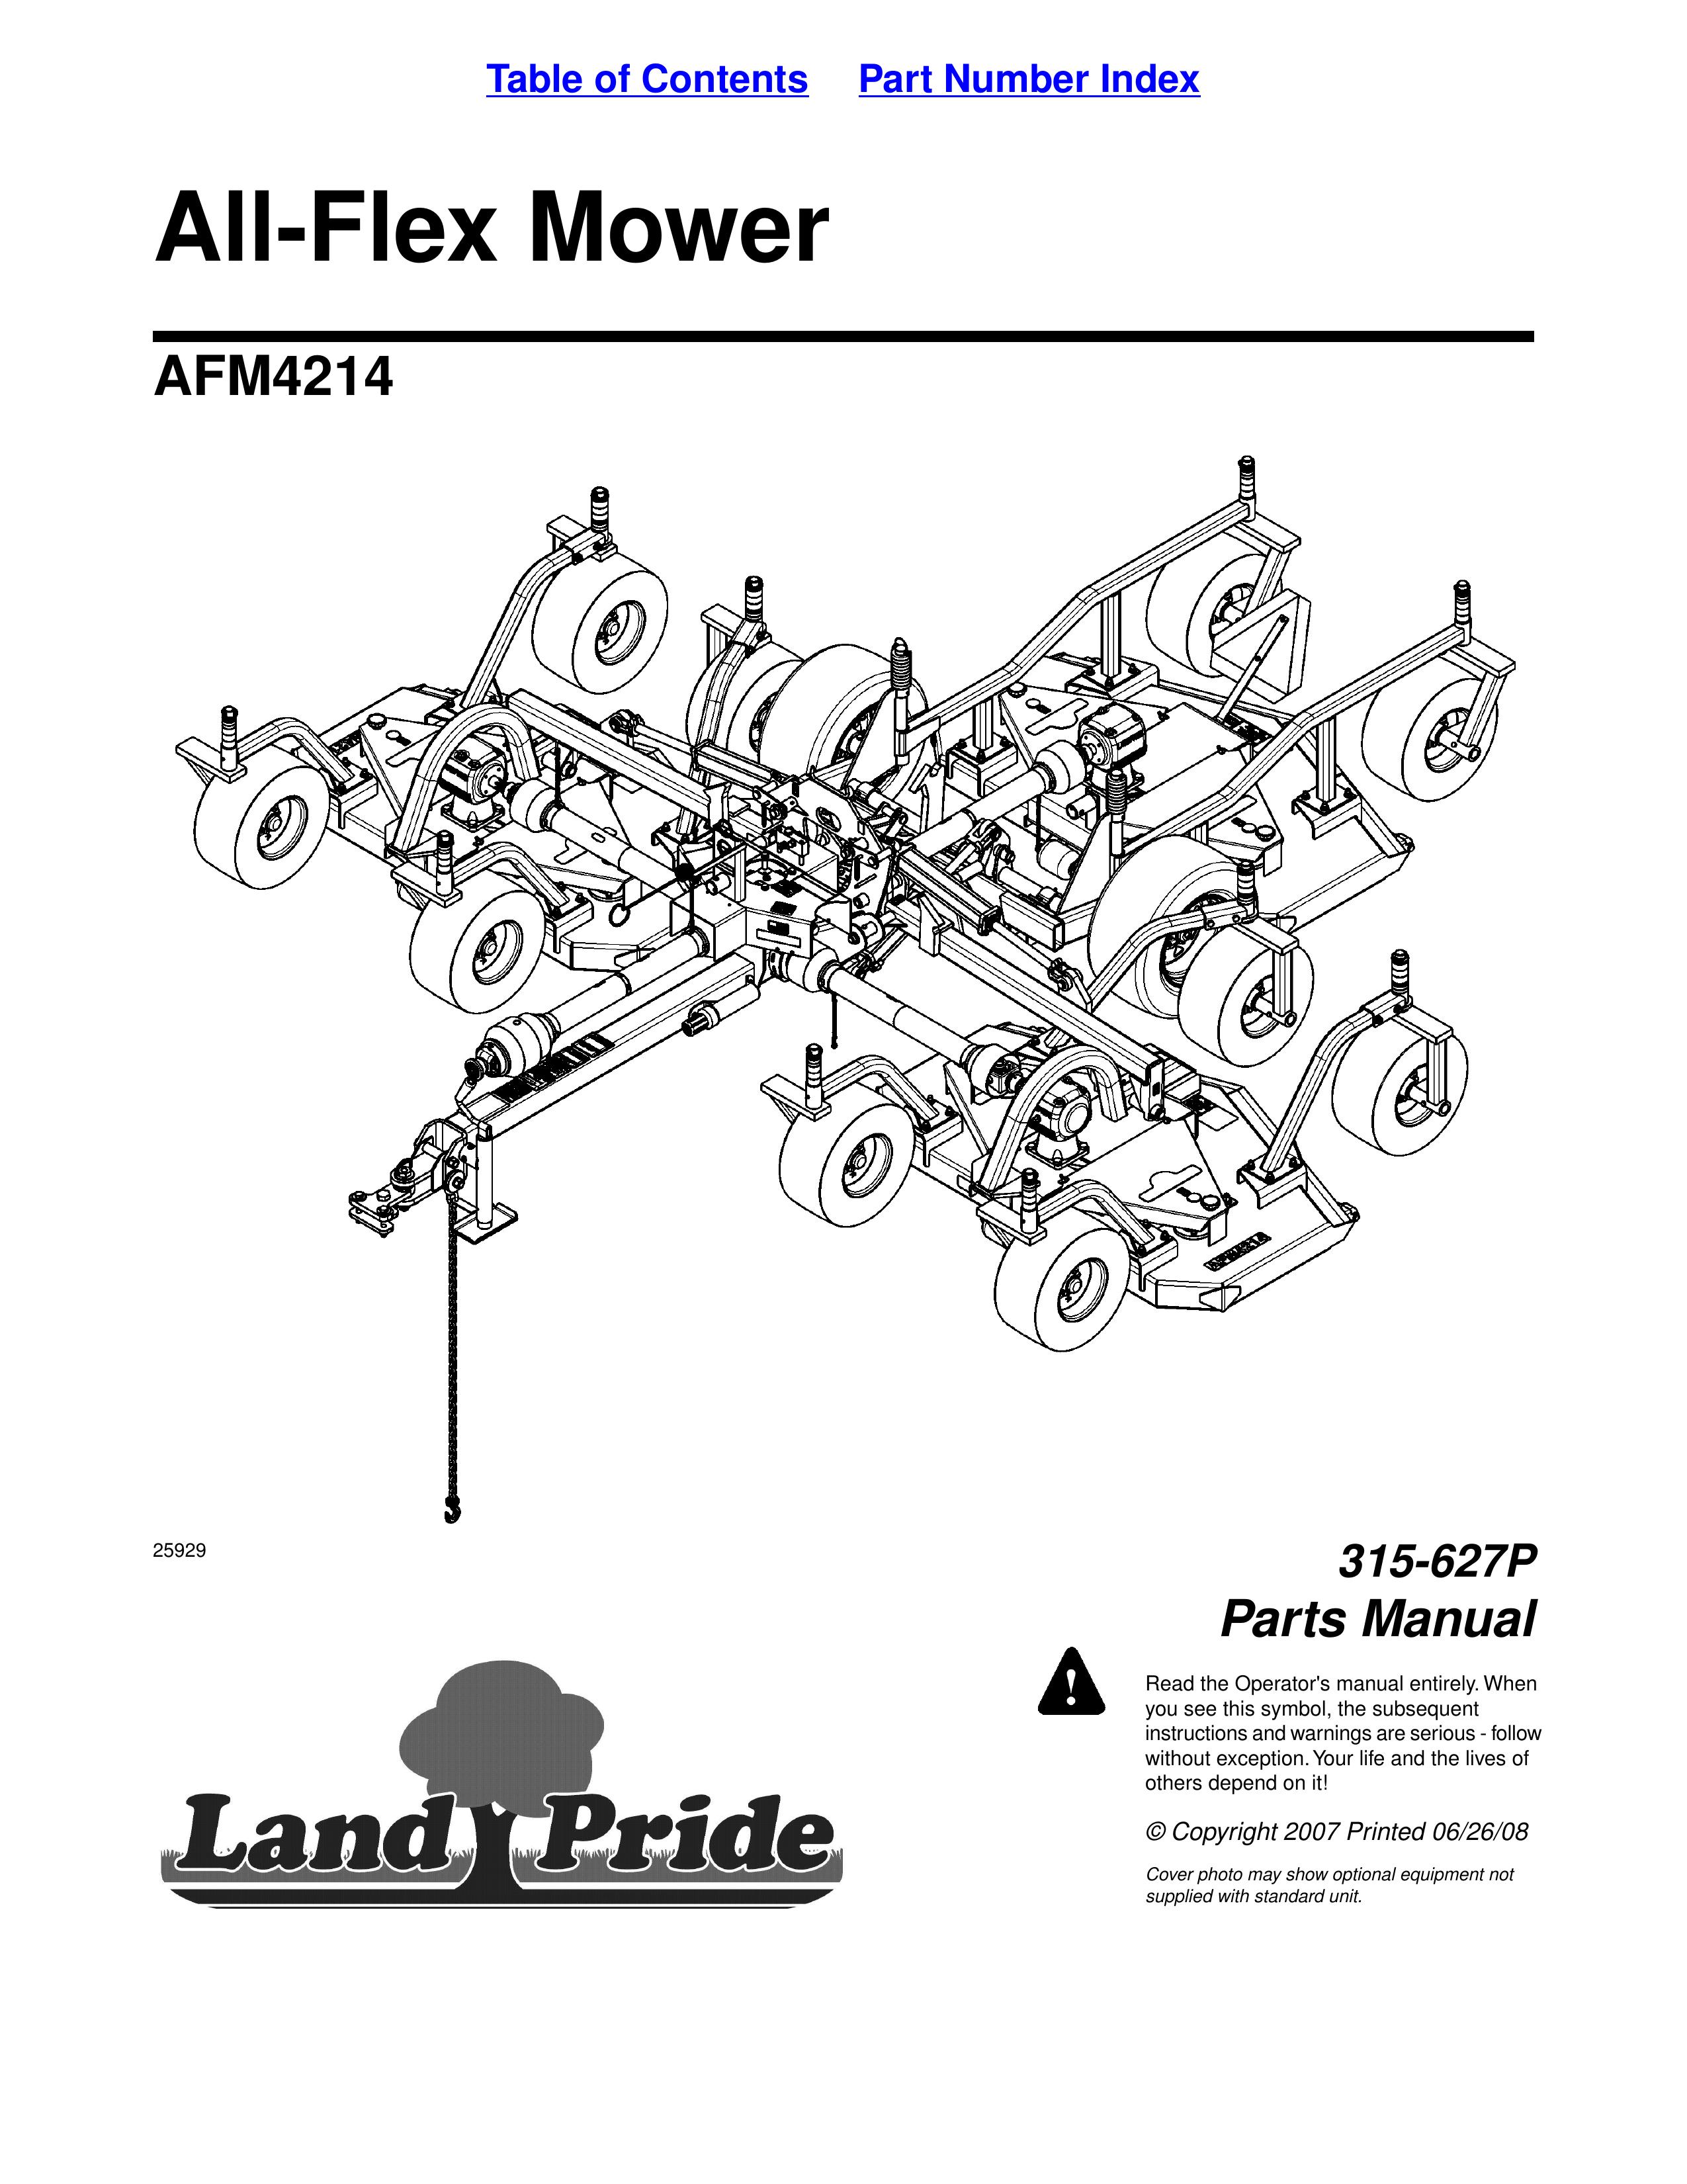 Land Pride AFM4214 Lawn Mower User Manual